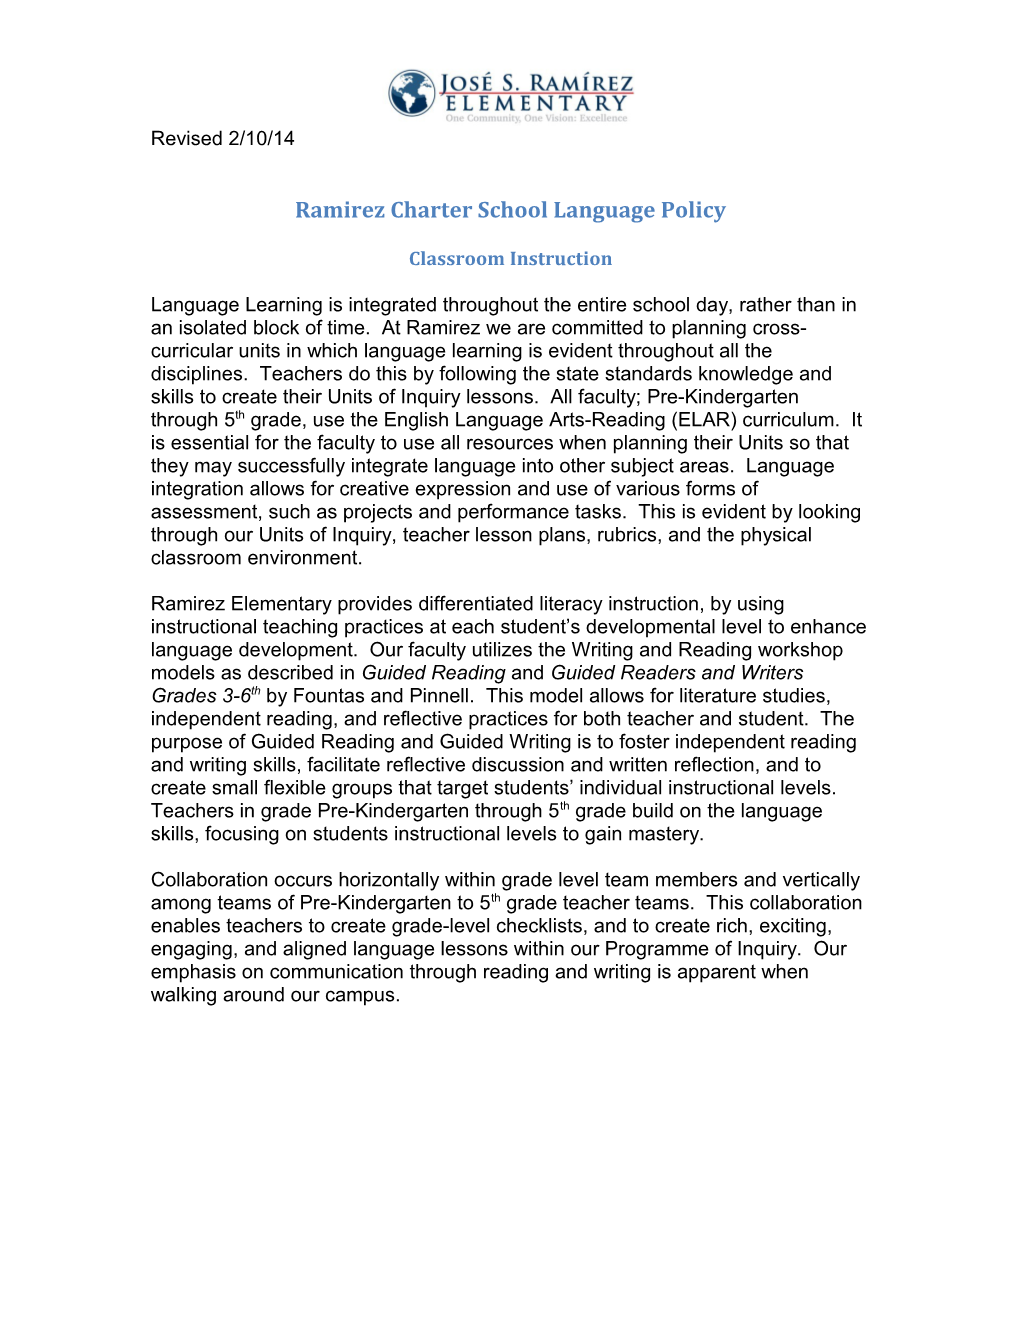 Ramirez Charter School Language Policy